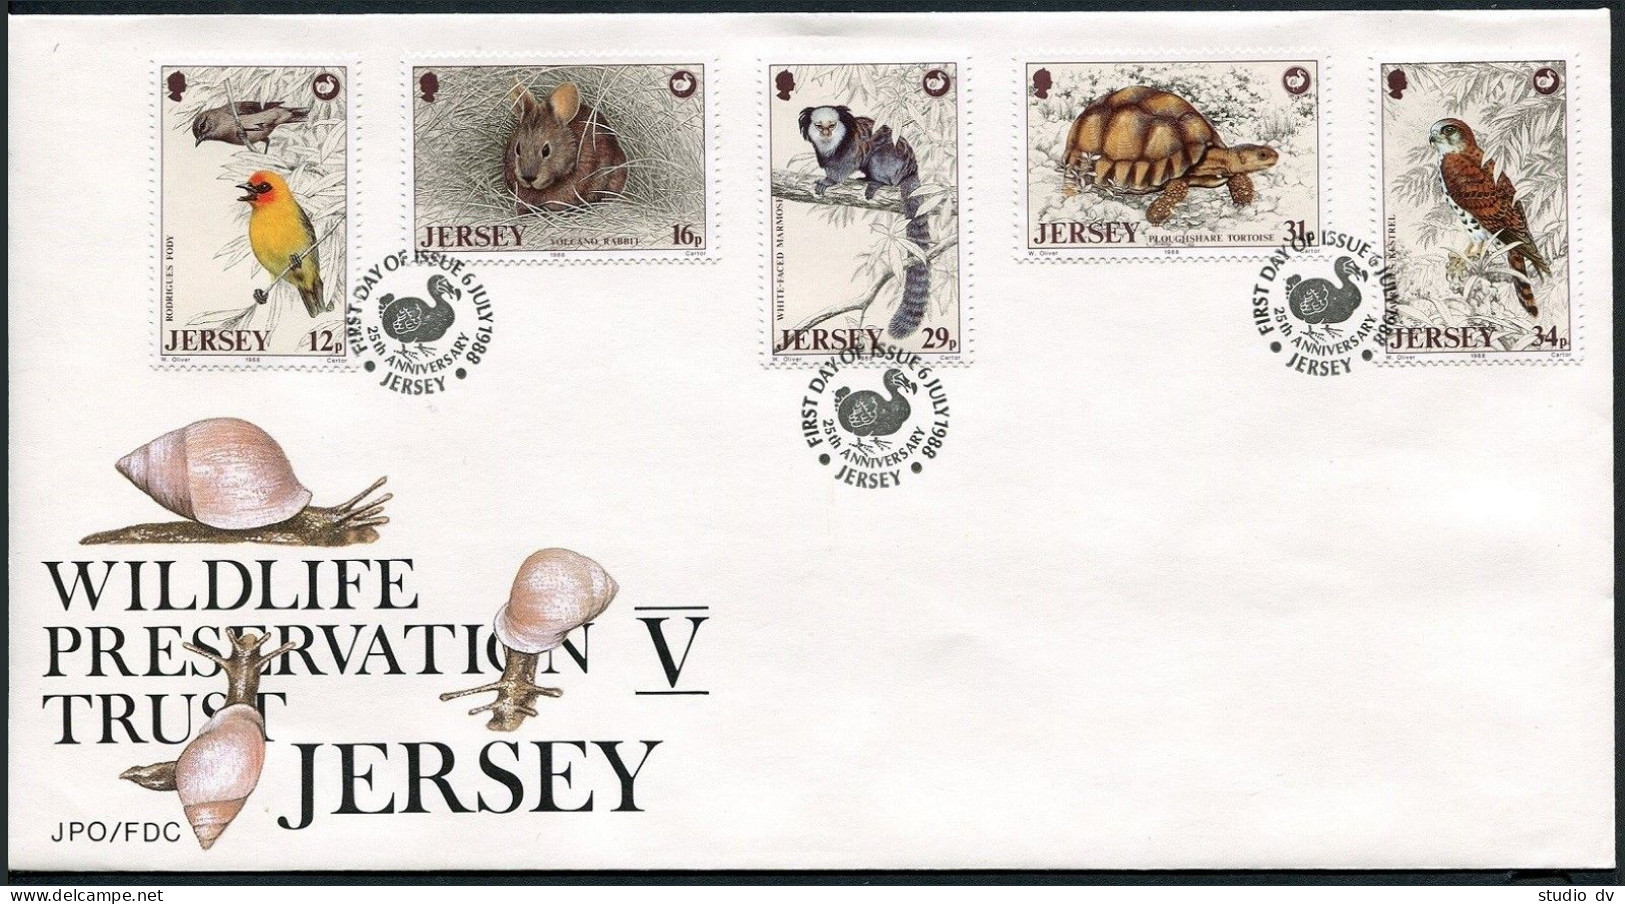 Jersey 456-60,FDC.Michel 442-446. Fody,Rabbit,Mormoset,Tortoise,Kestrel,1988. - Jersey